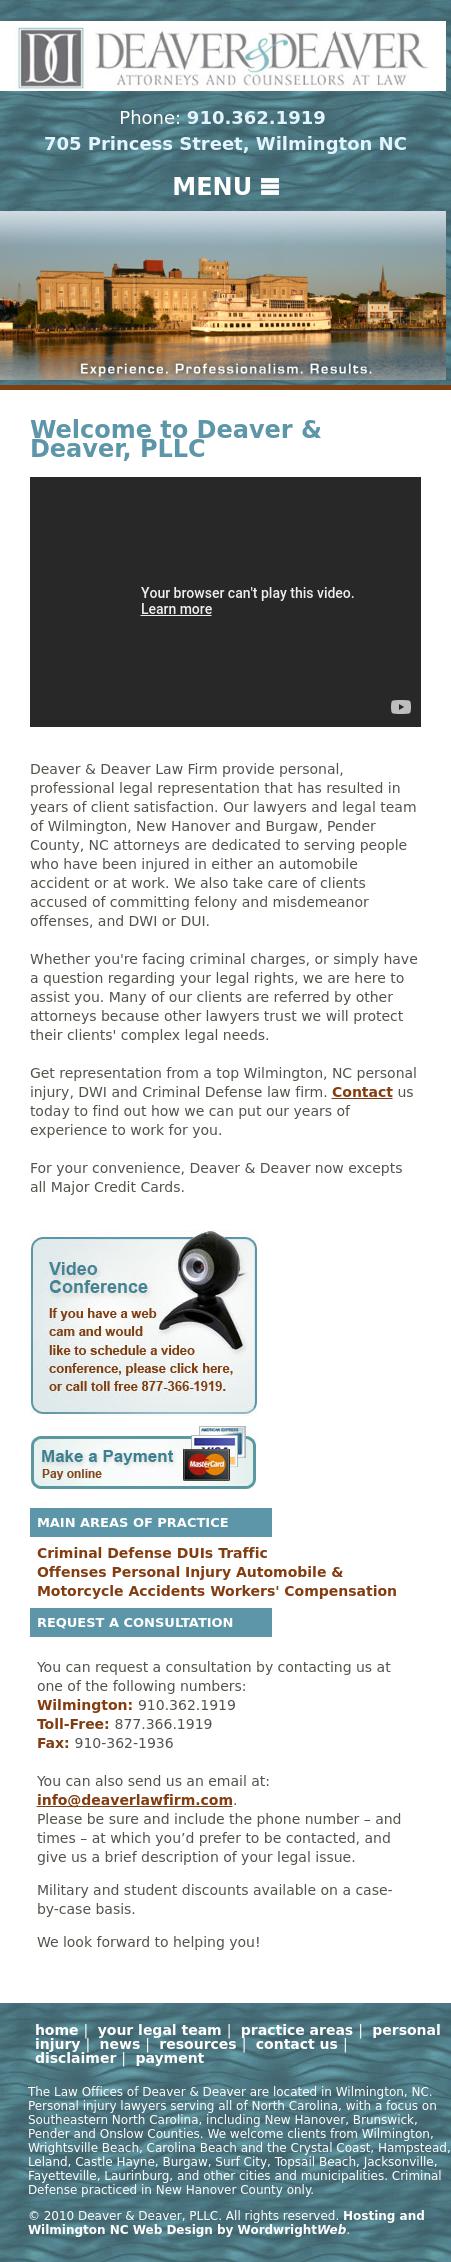 Deaver & Deaver PLLC - Wilmington NC Lawyers